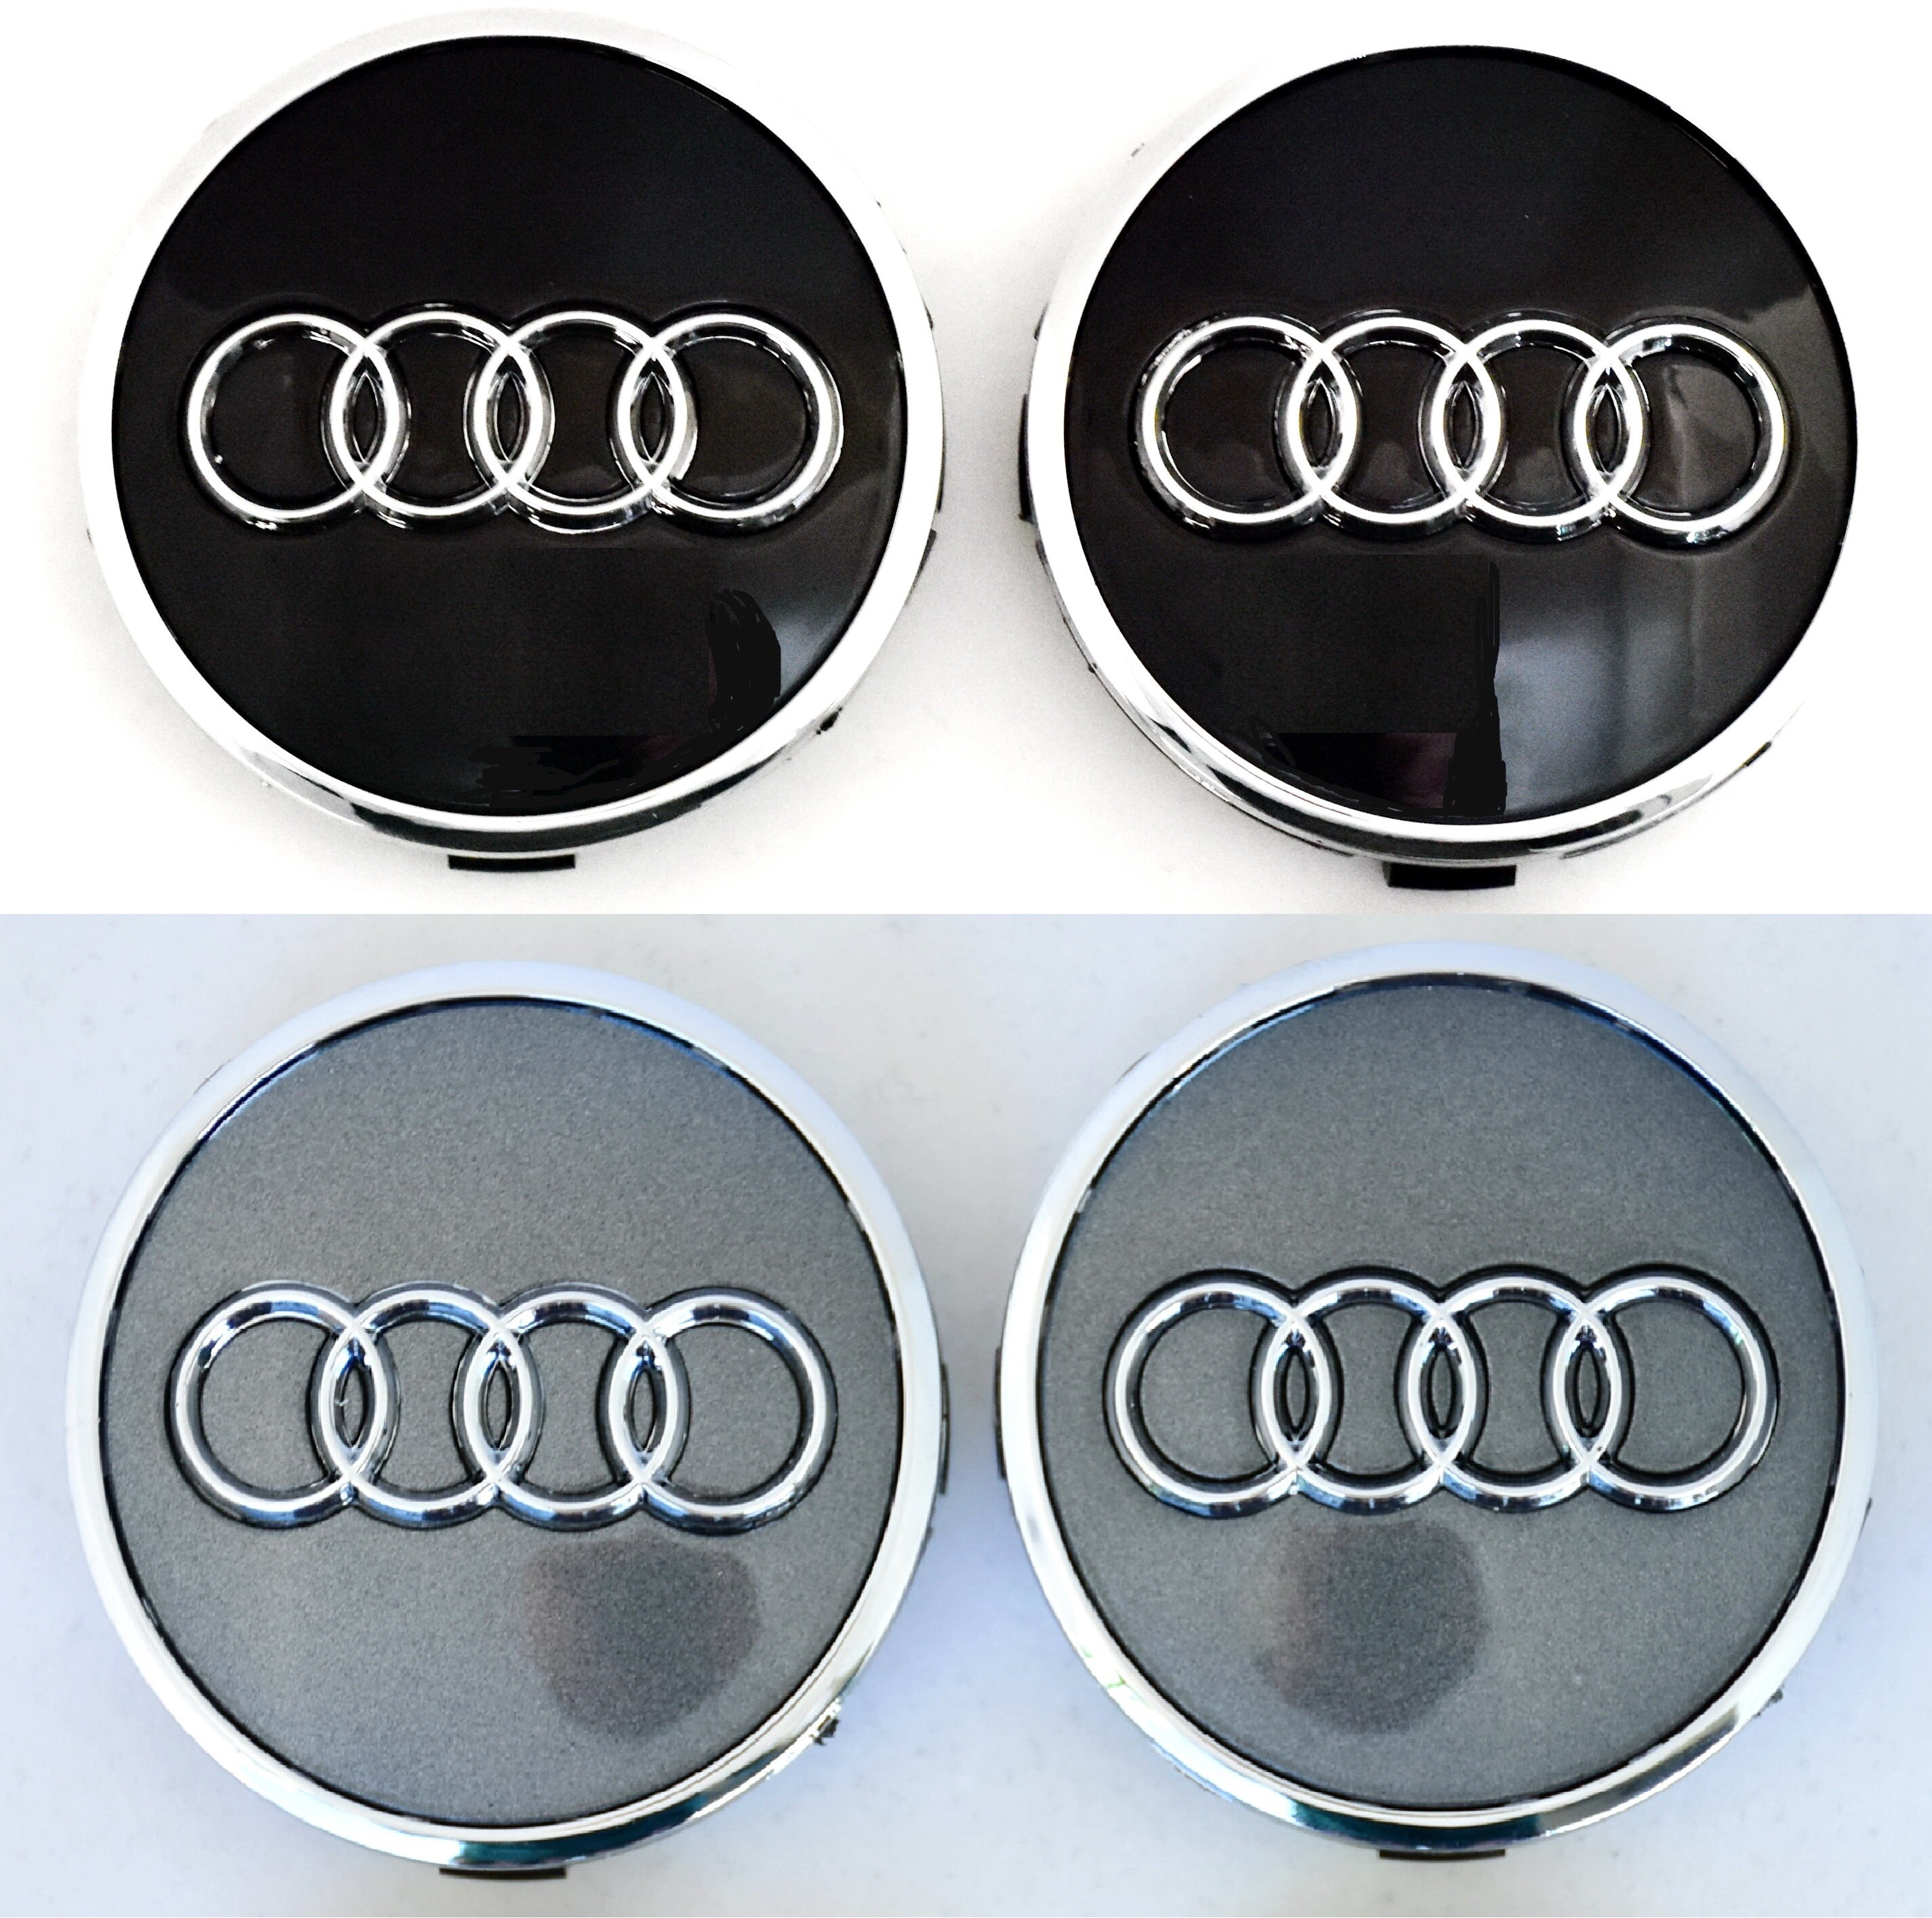 for Audi Car Cup Holder Coaster,Audi Coasters for Car,Cup Holder Insert Coaster for Audi A1 A3 RS3 A4 A5 A6 A7 RS7 A8 Q3 Class S Series,Anti Slip